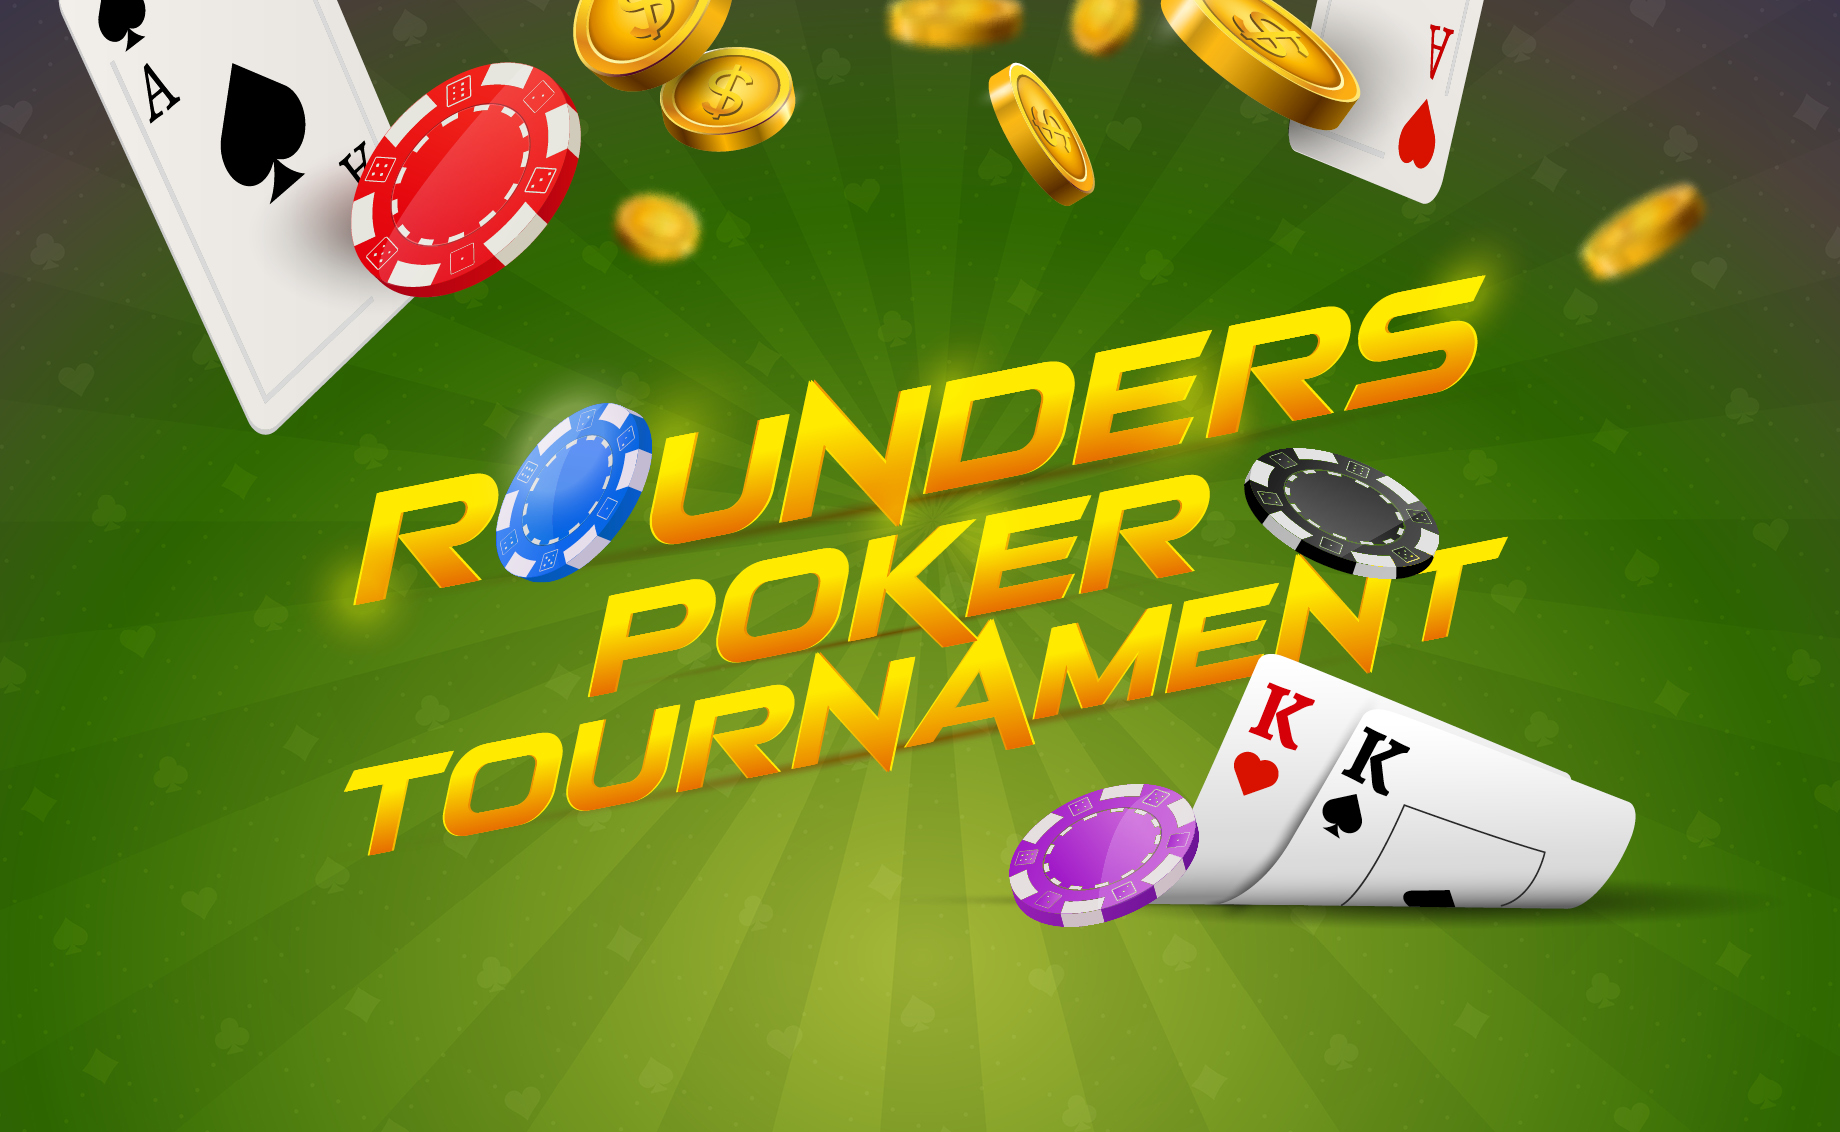 rounders poker club